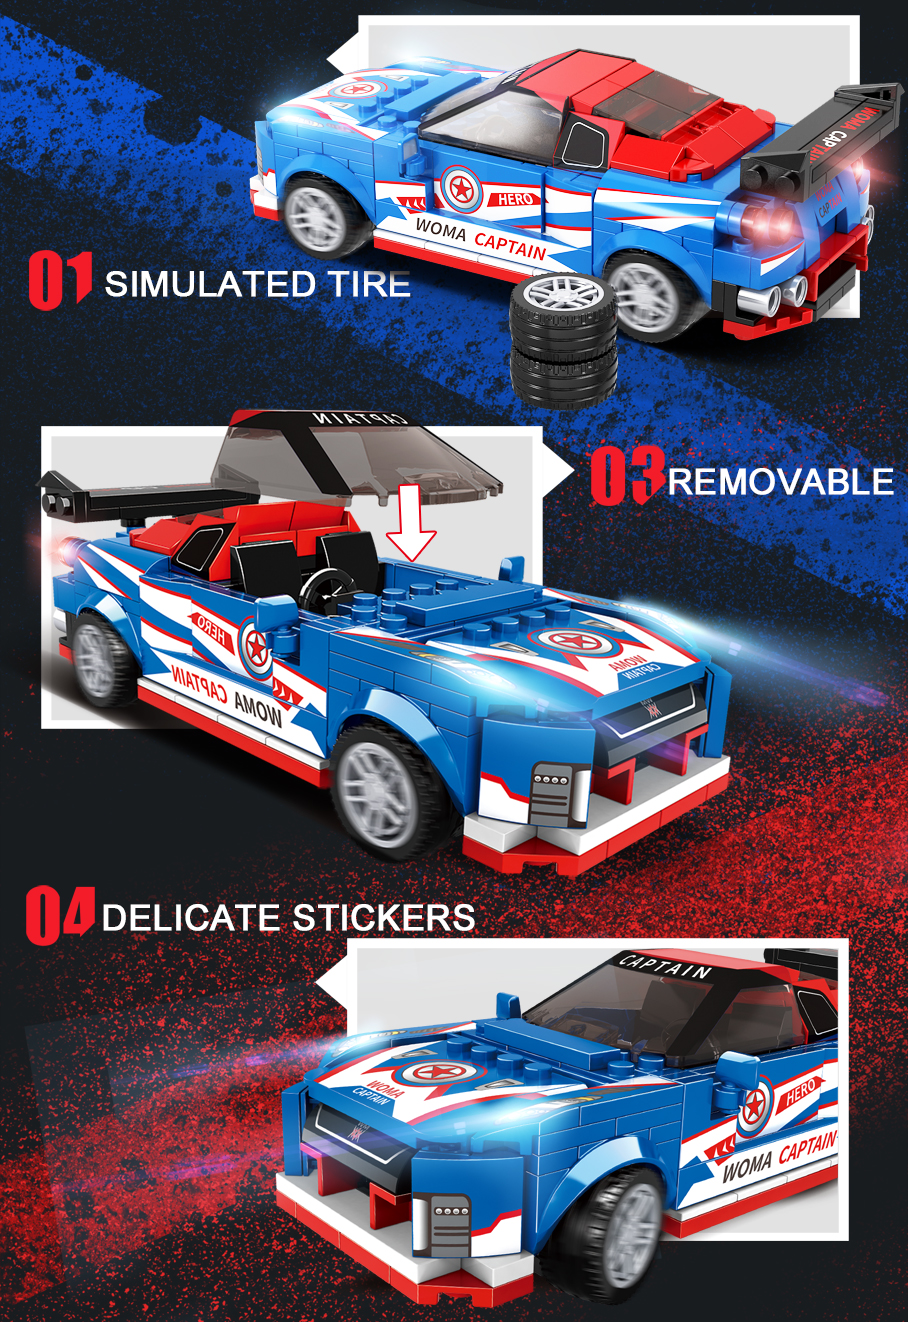 WOMA TOYS classic car blue speed racing car model building blocks bricks oyuncak assembly diy educational game